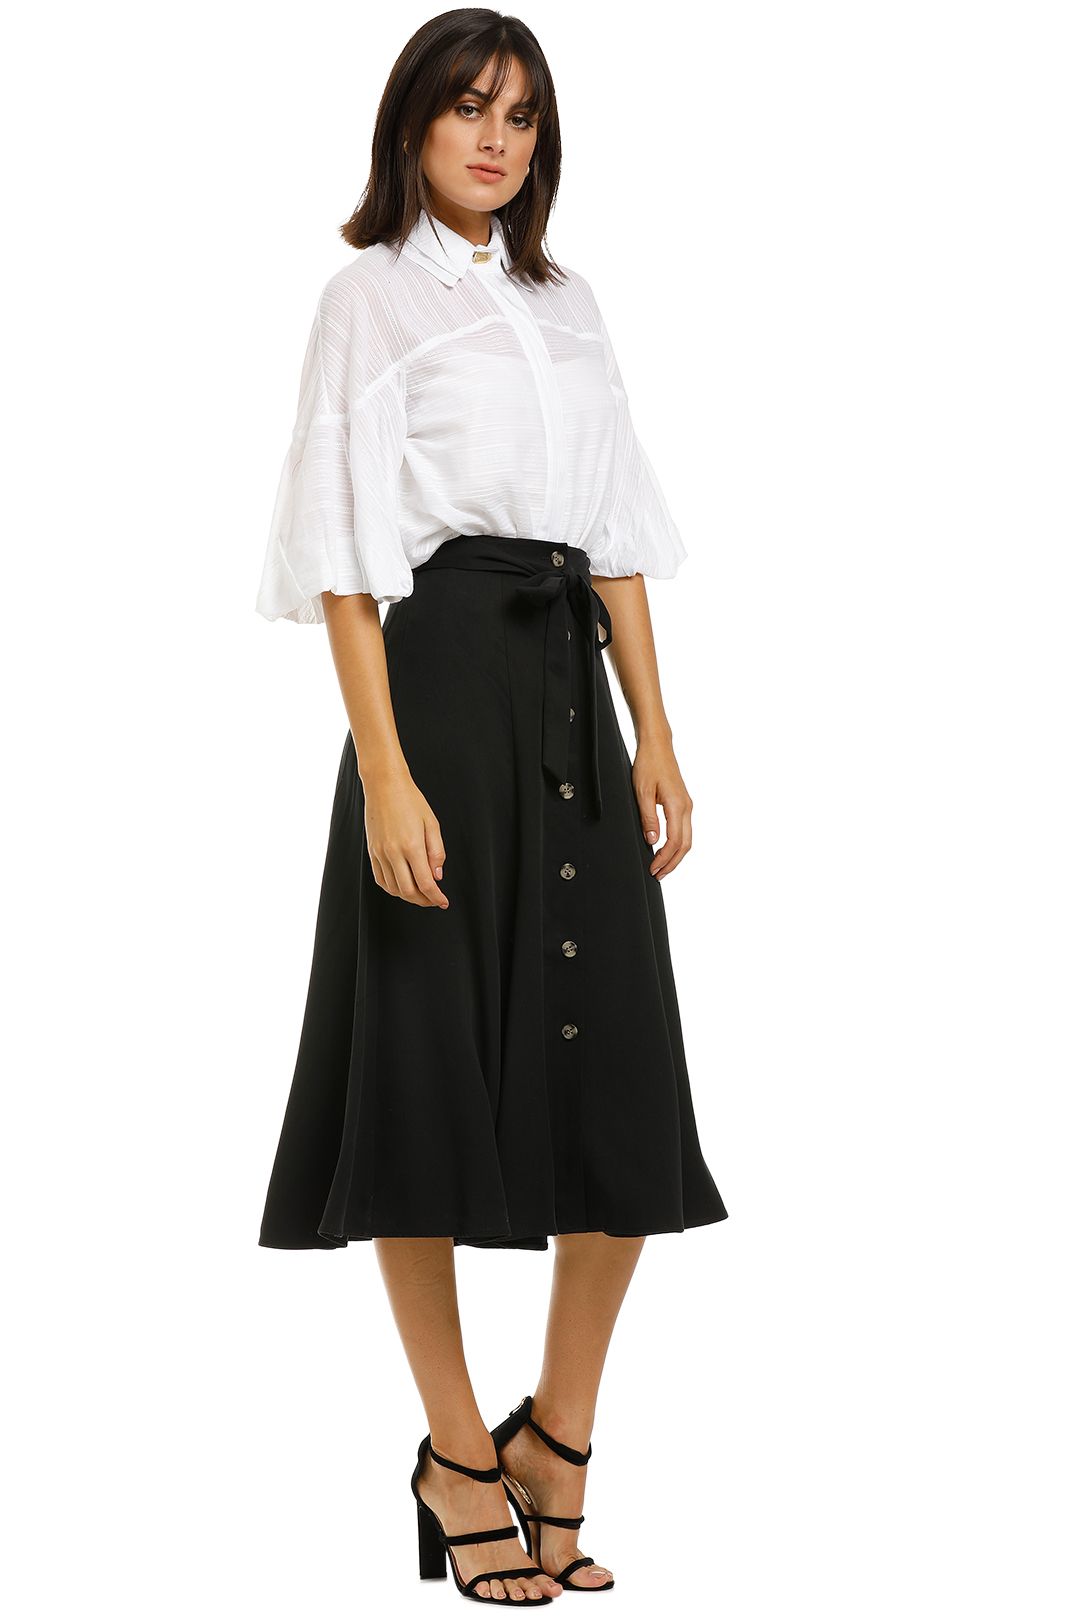 Marissa Button Through Skirt in Black by Whistles for Hire | GlamCorner